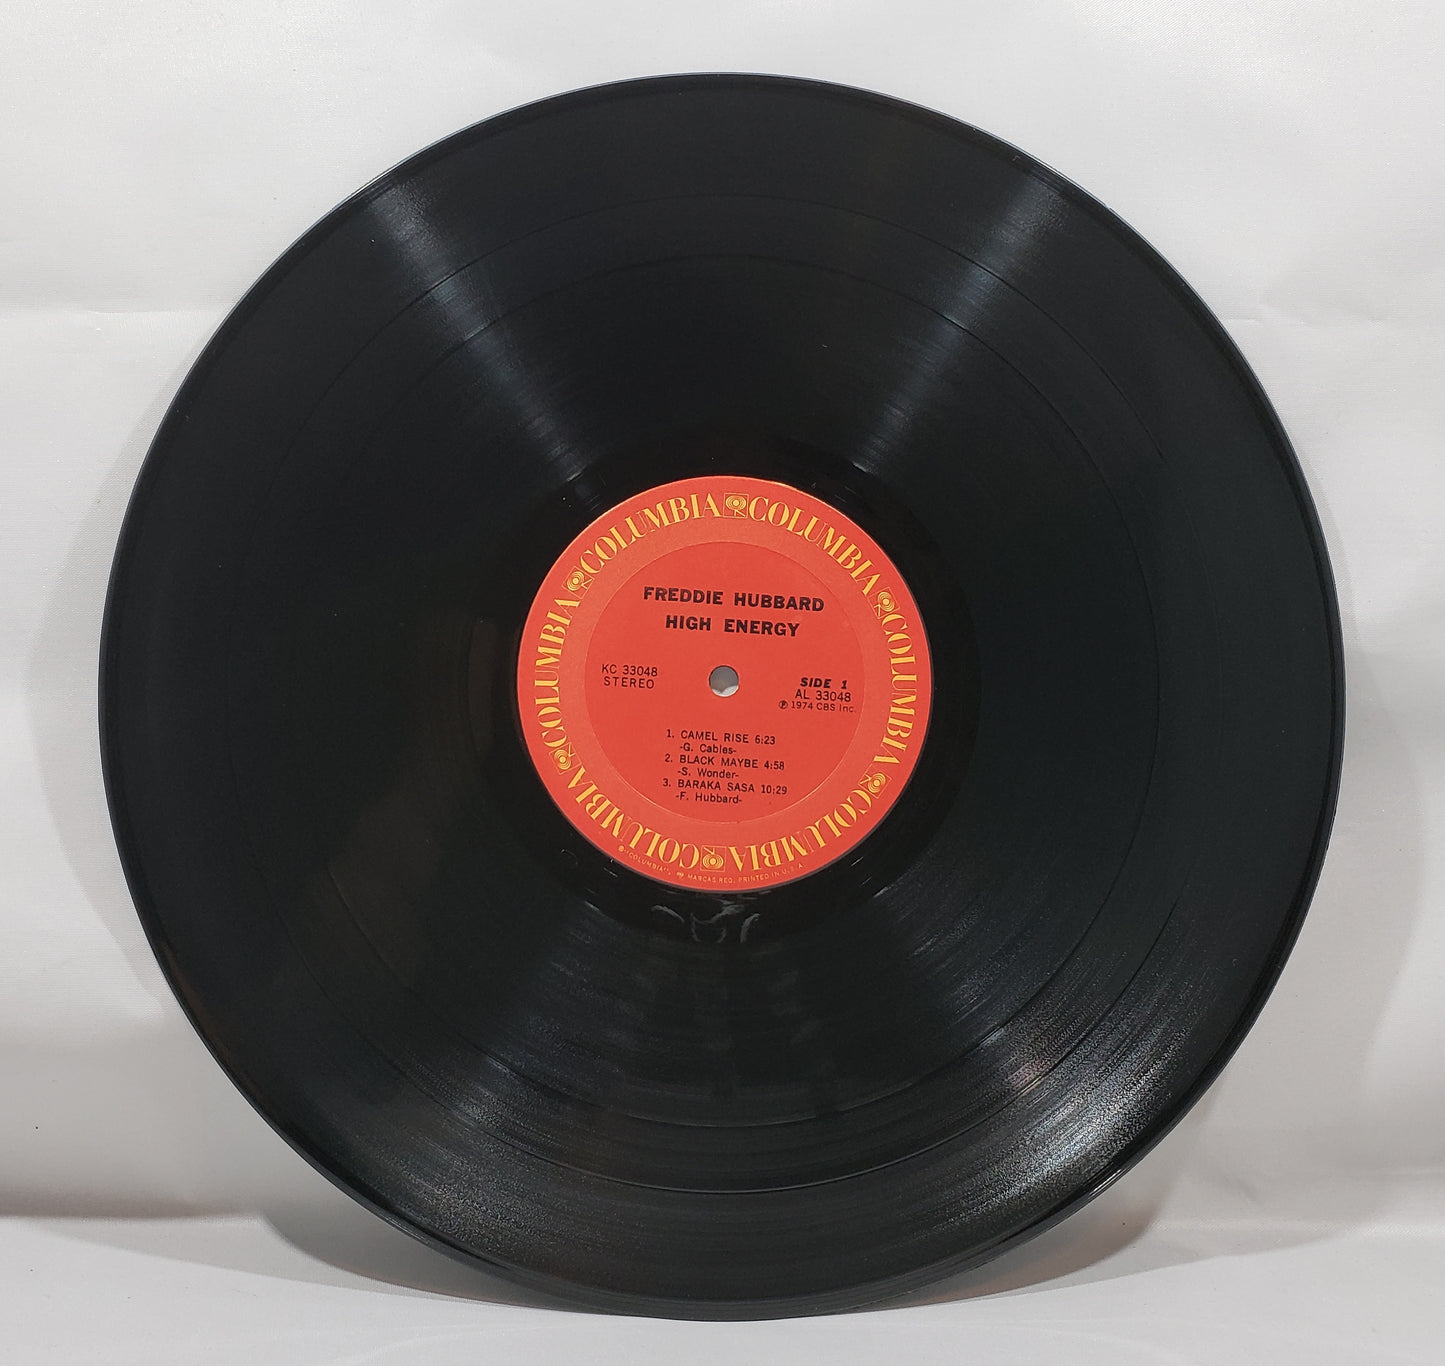 Freddie Hubbard - High Energy [1974 Terre Haute] [Used Vinyl Record LP]